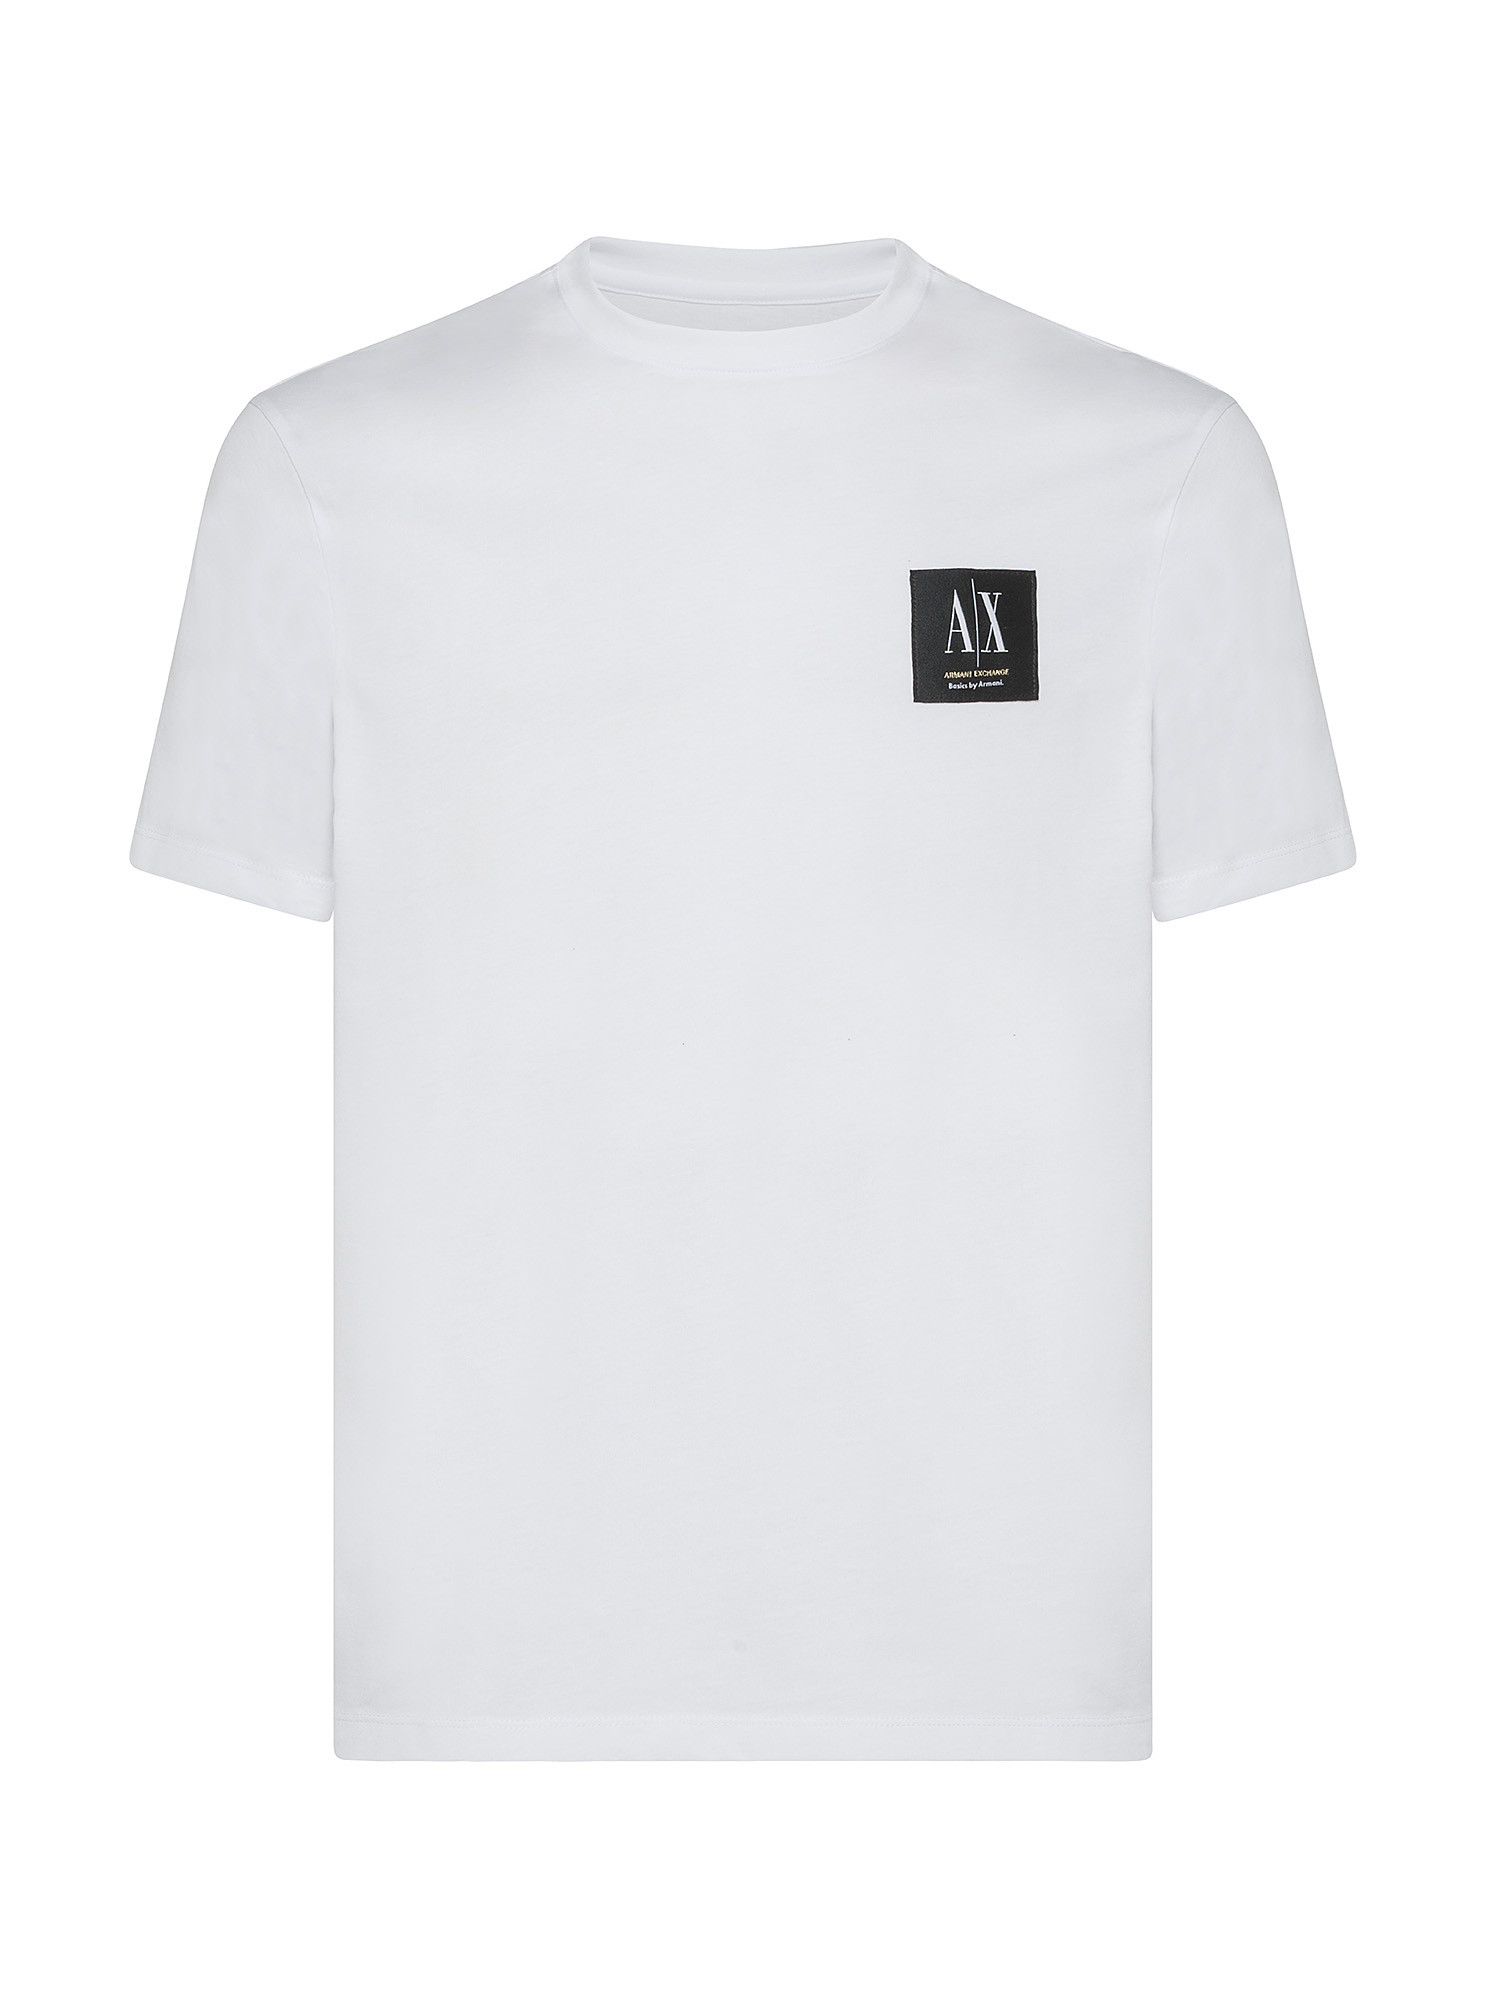 Armani Exchange - T-shirt regular fit in cotone organico con logo, Bianco, large image number 0